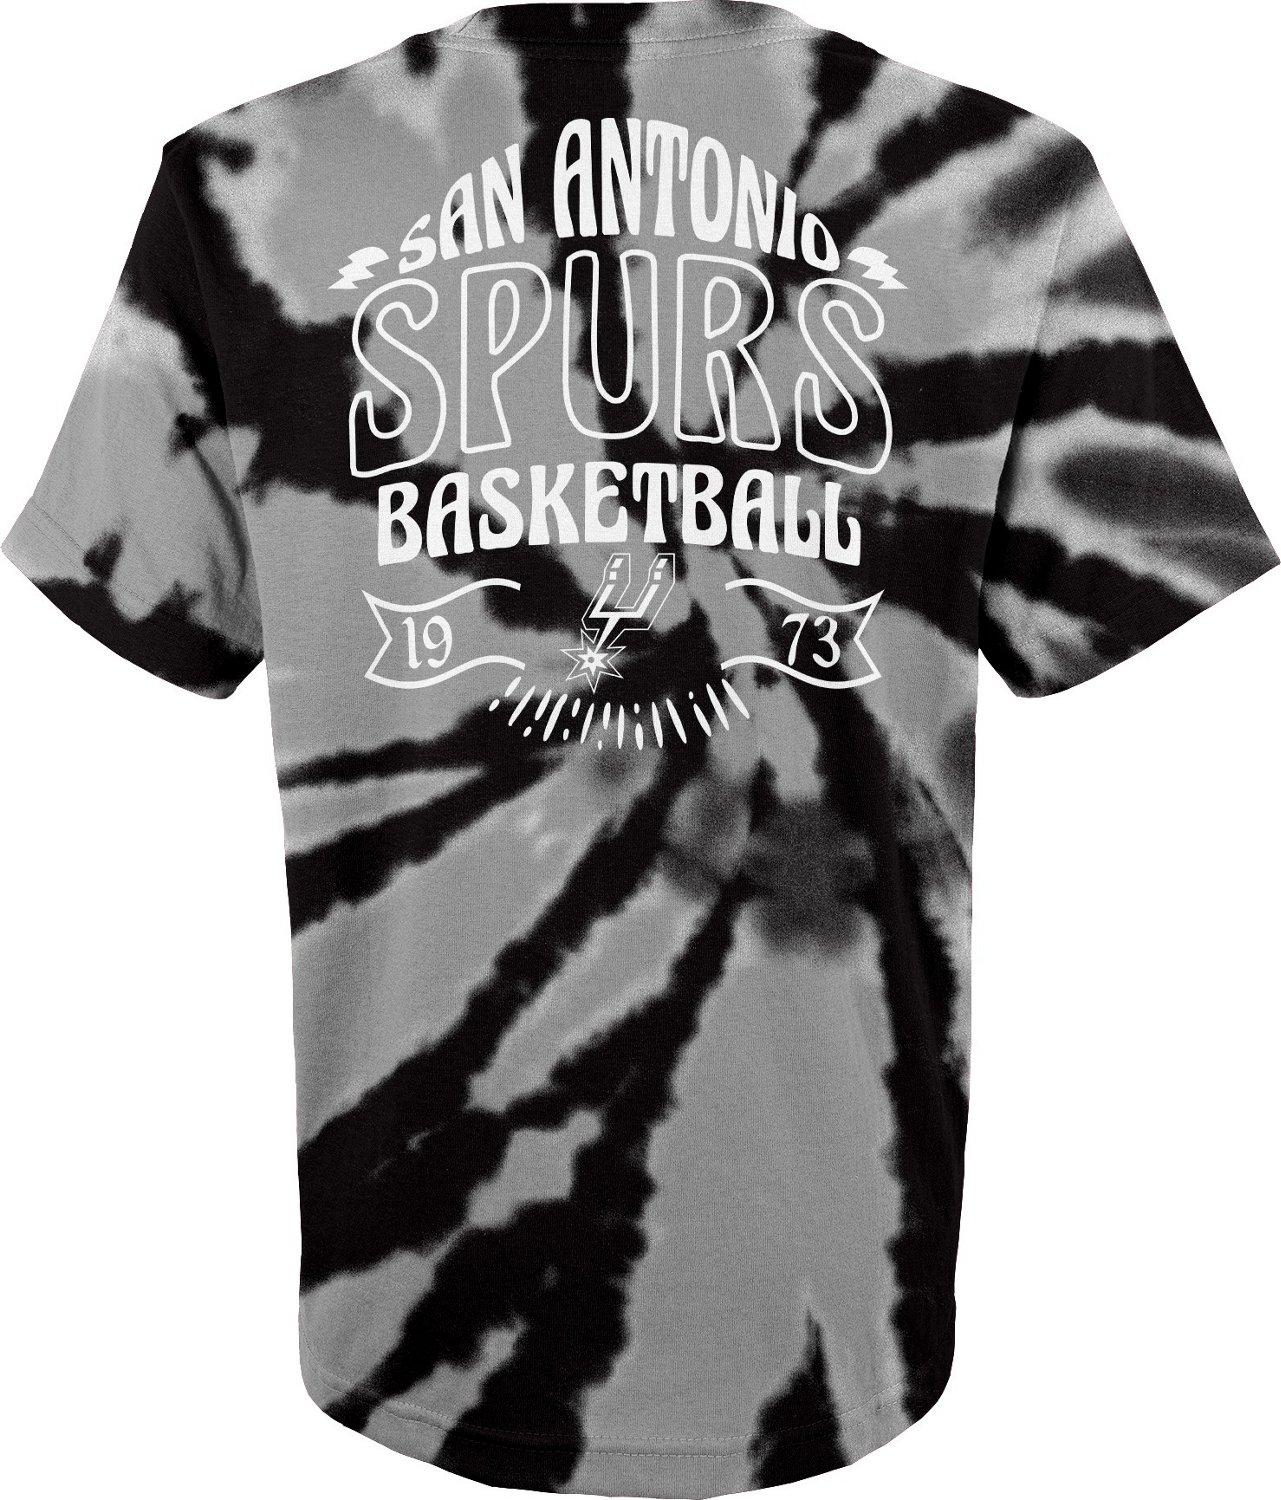  NBA by Outerstuff NBA Youth Boys San Antonio Spurs